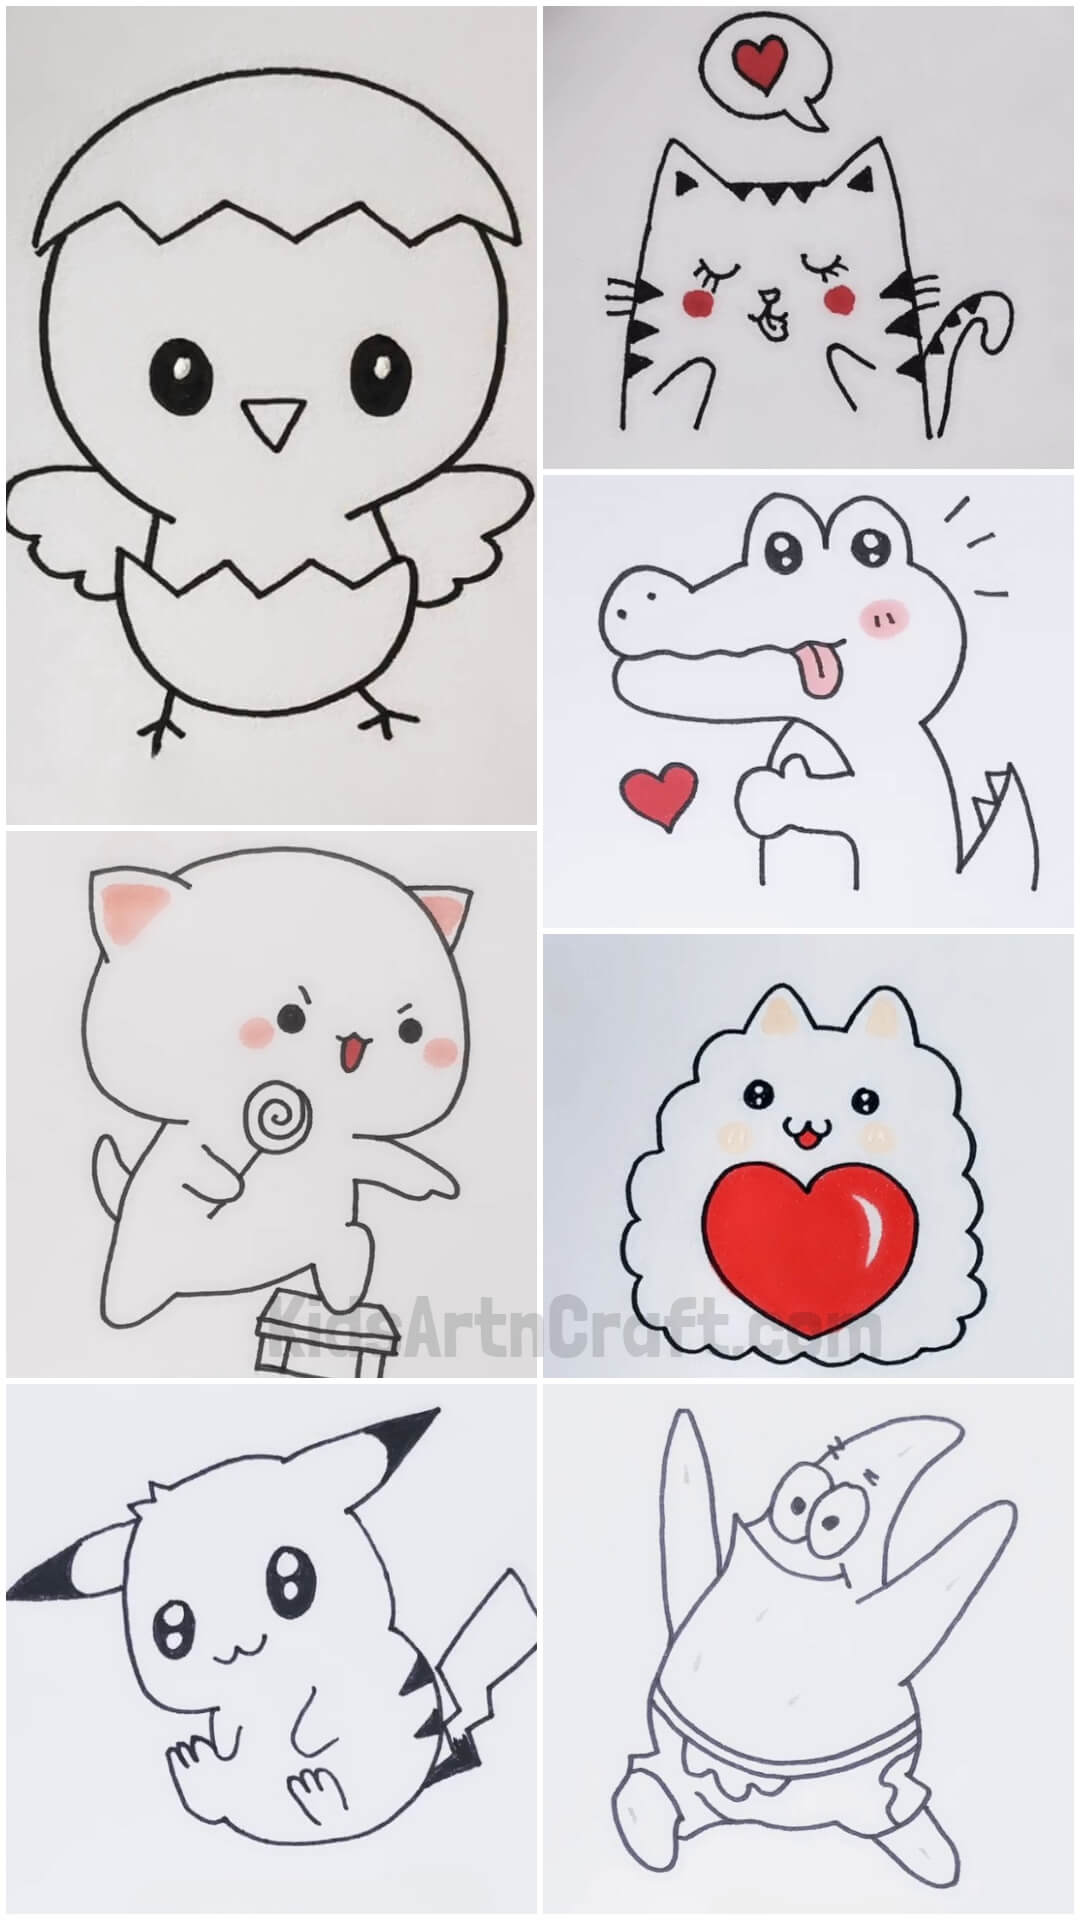 Cute Cartoon Animal Drawings for Kids